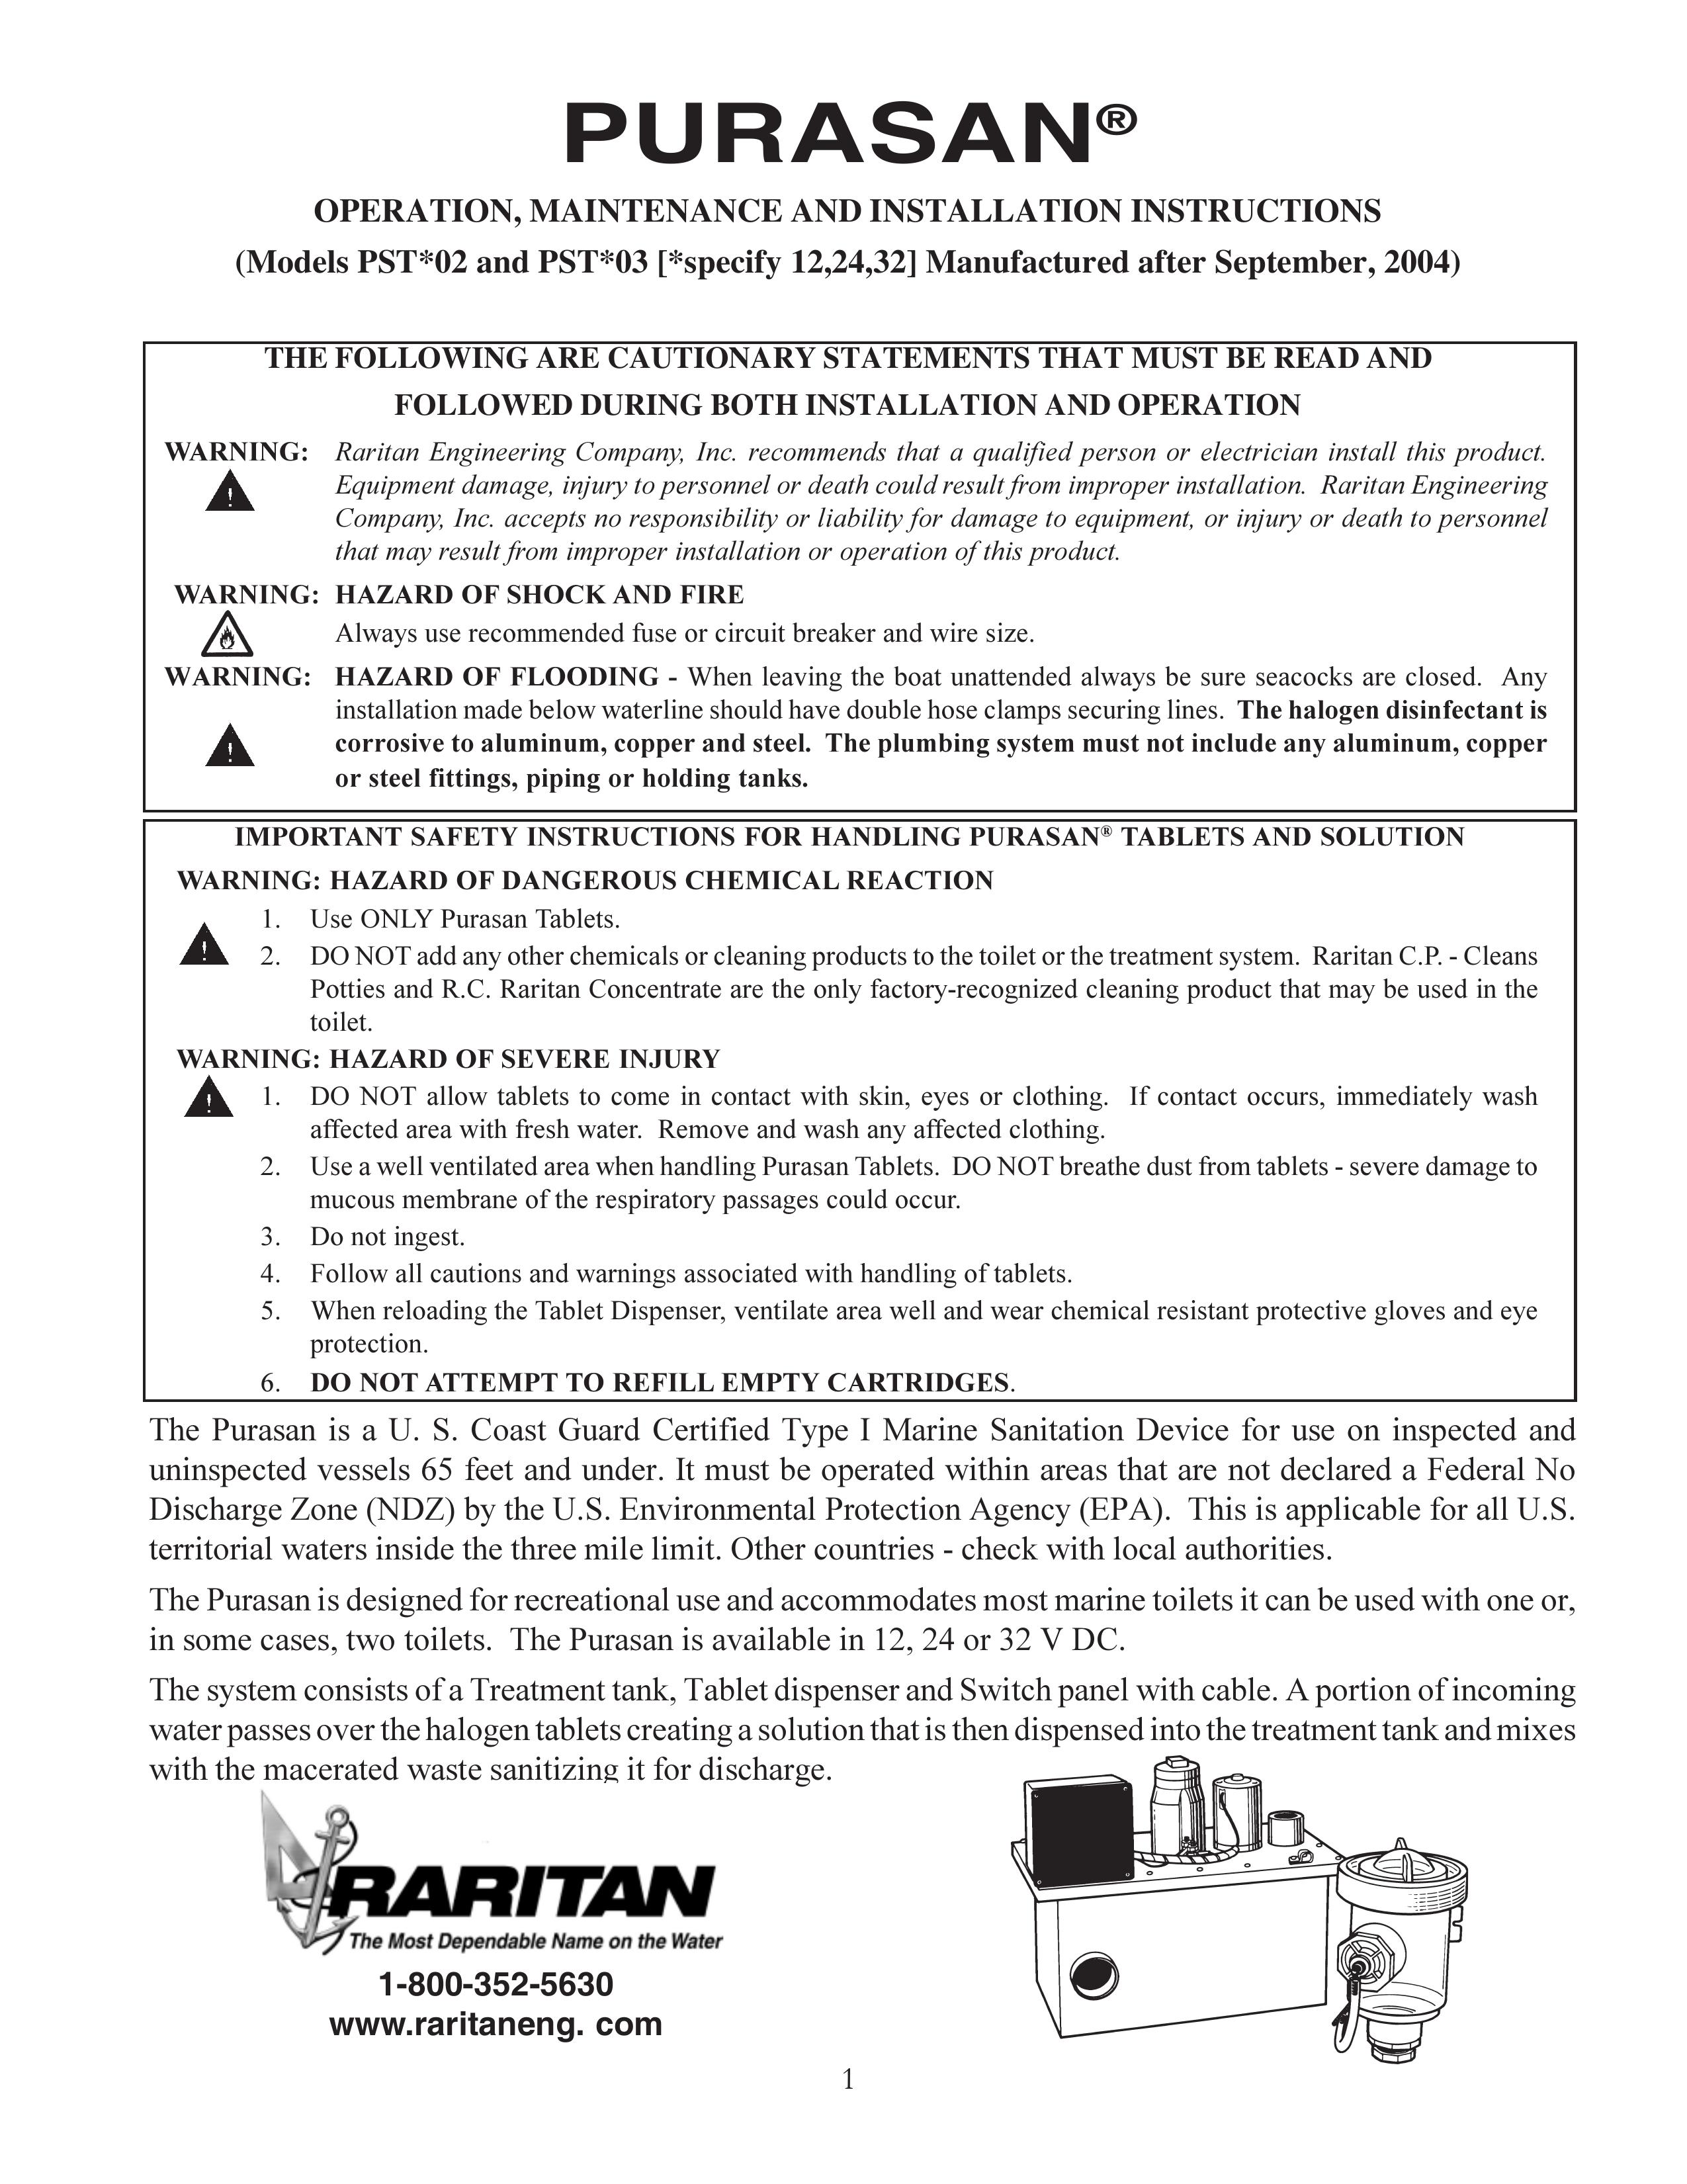 Raritan Engineering PST*02 Marine Sanitation System User Manual